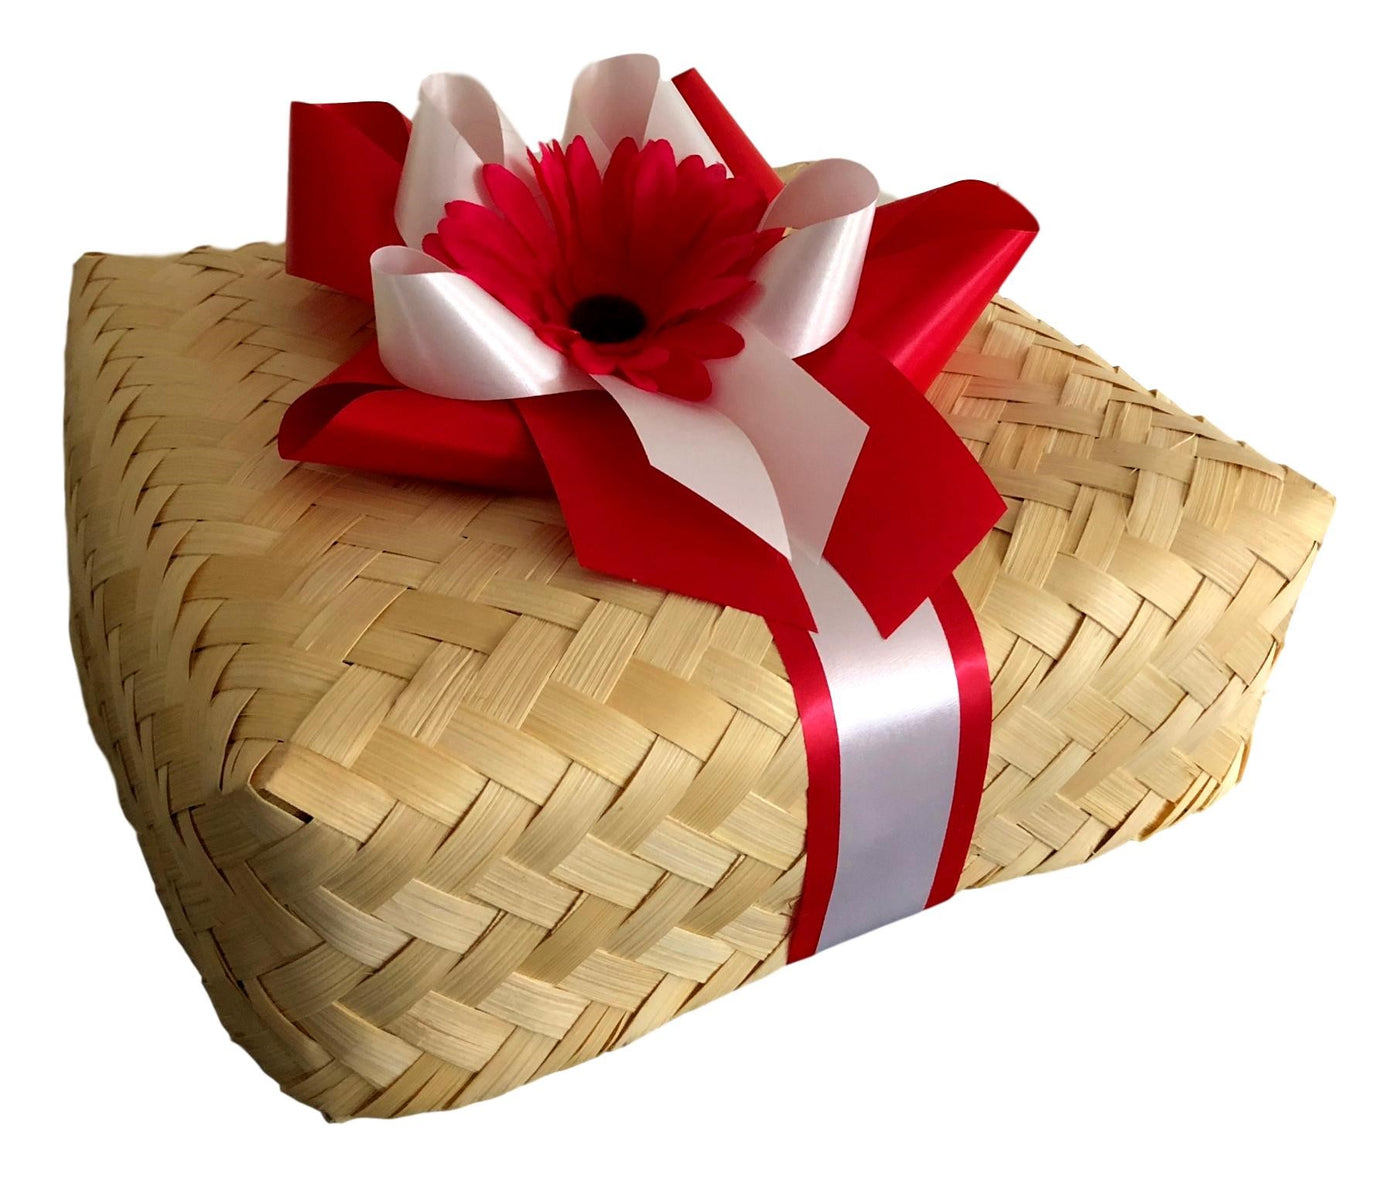 Sympathy, Condolence Gift baskets & gift hampers - Basket Creations NZ